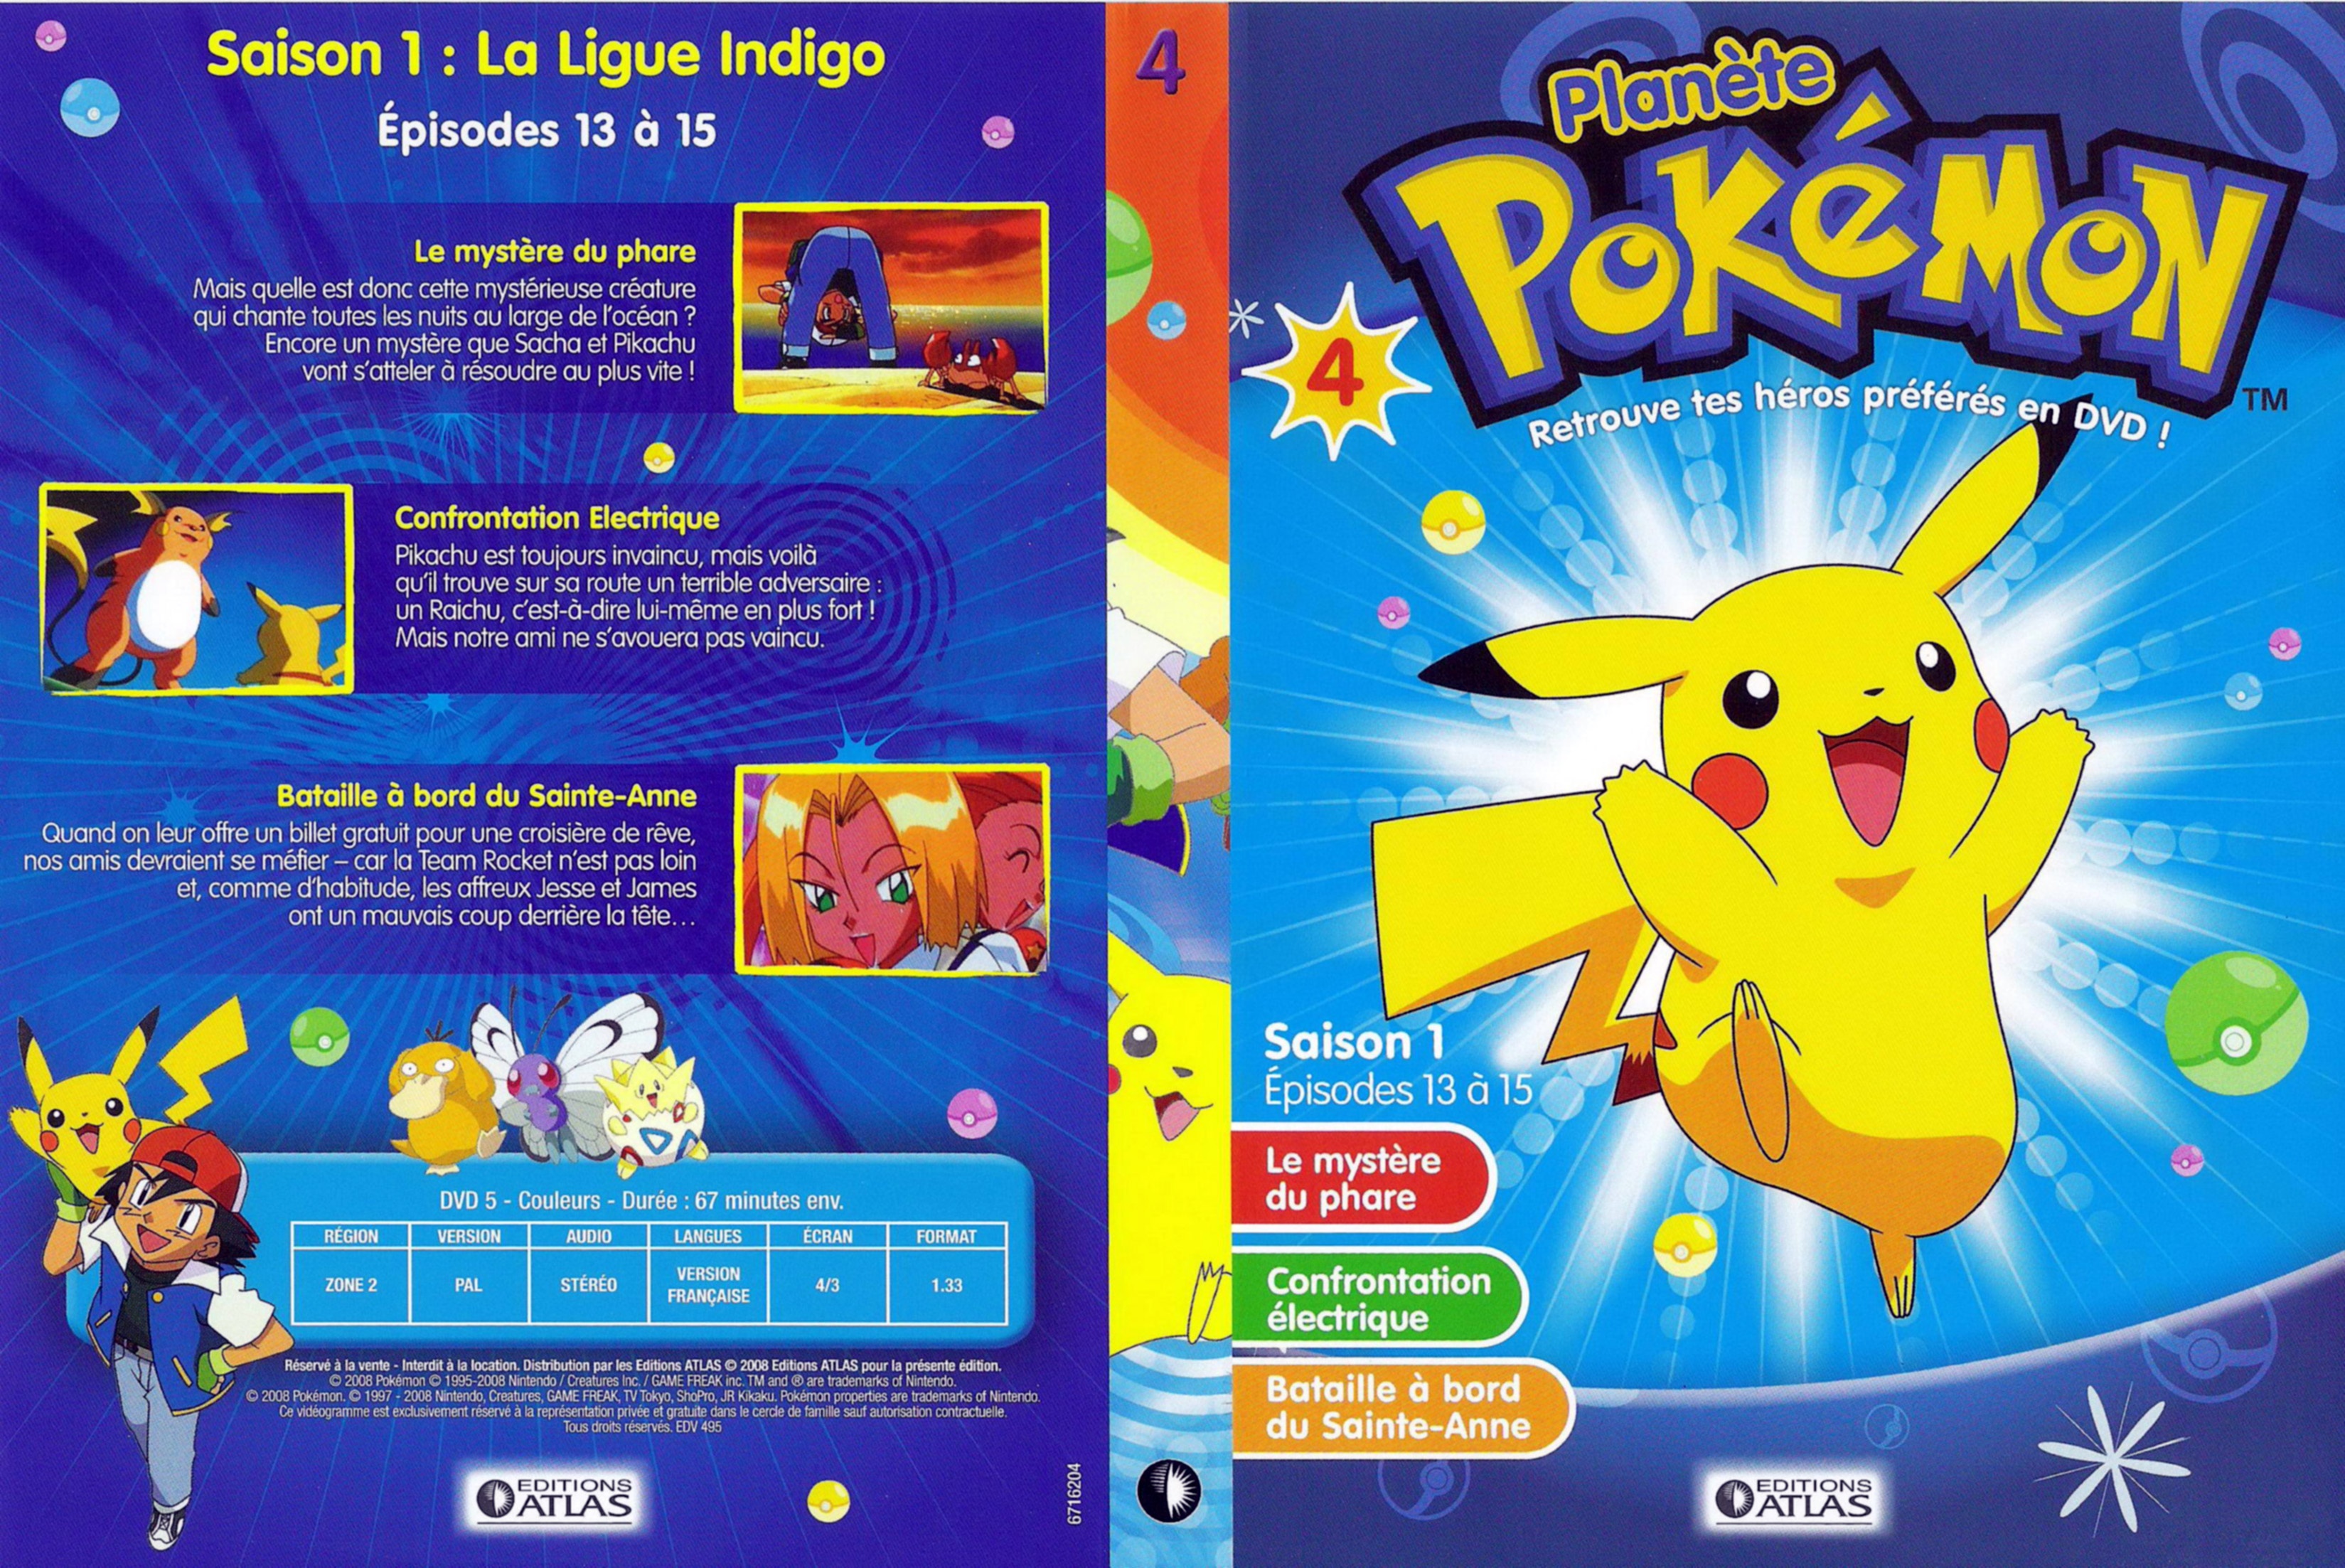 Jaquette DVD Plenete Pokemon vol 04